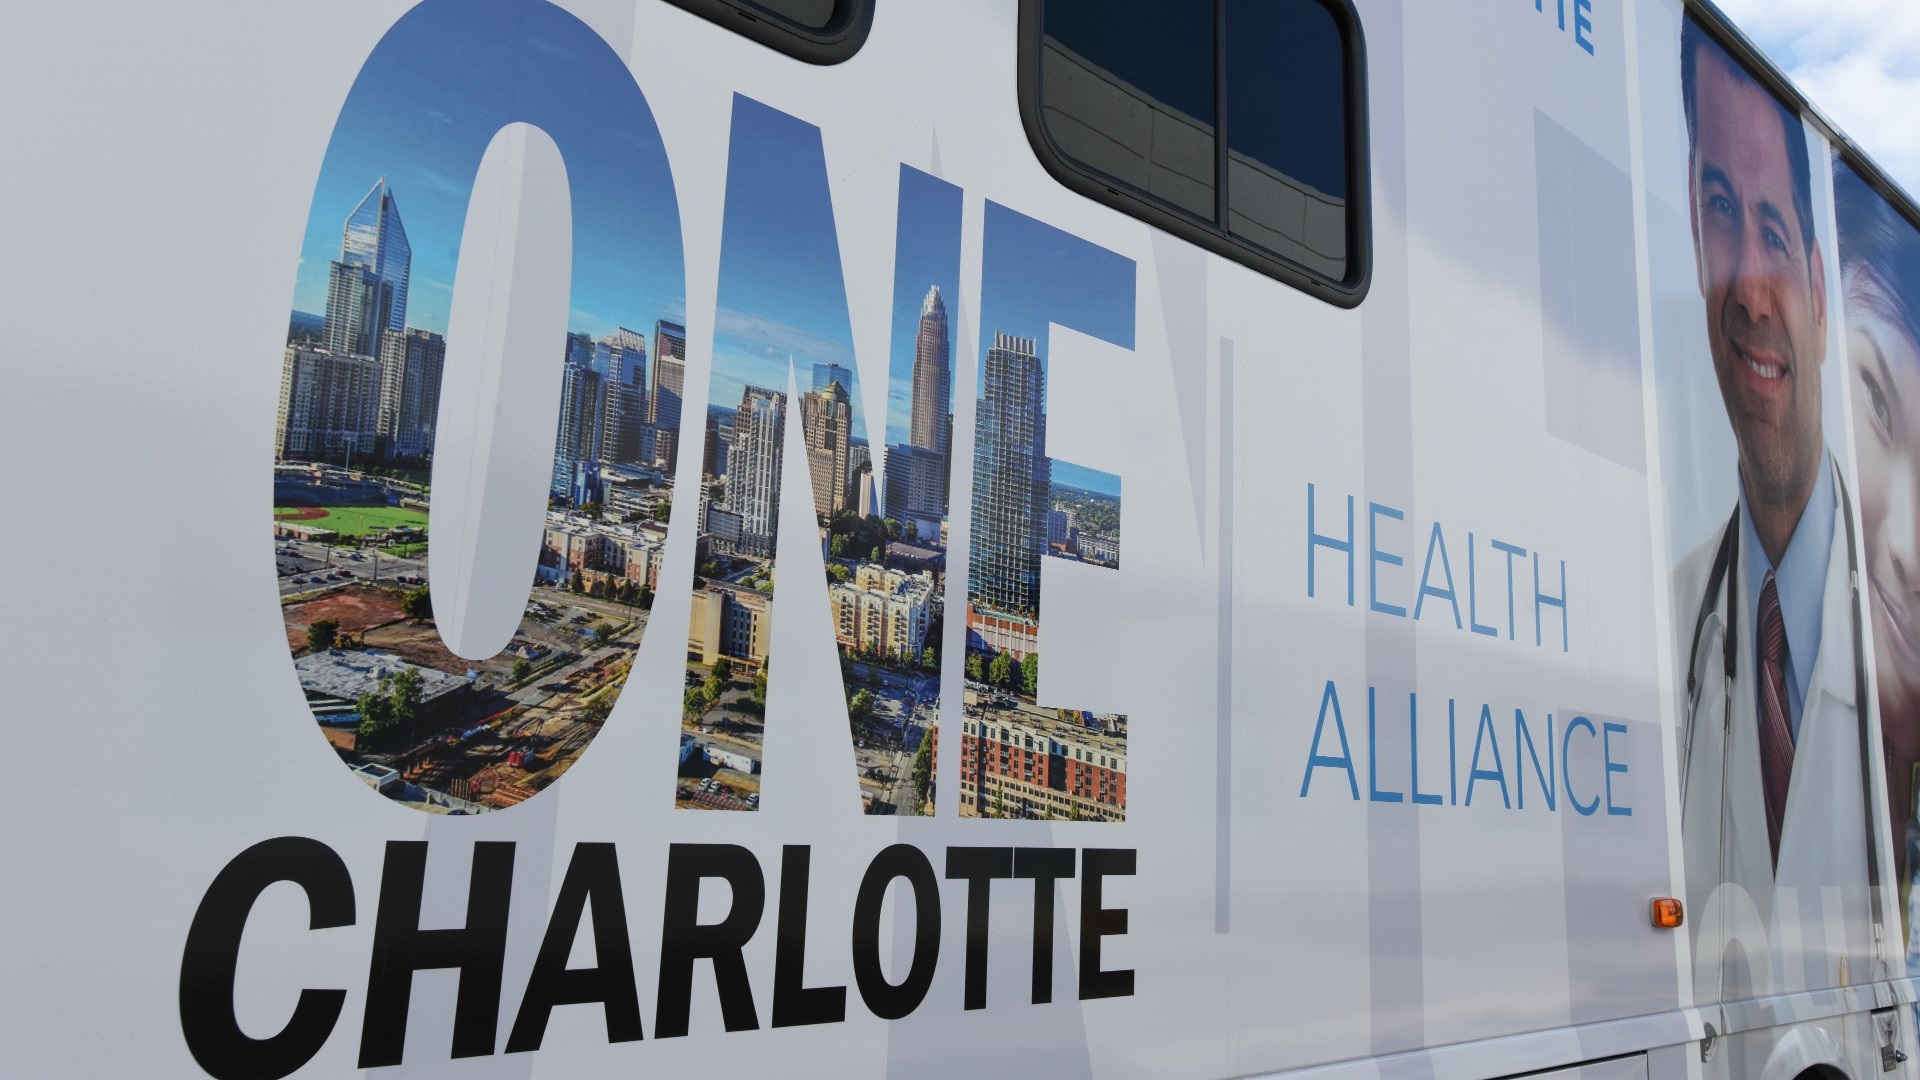 ONE Charlotte Health Alliance mobile unit.